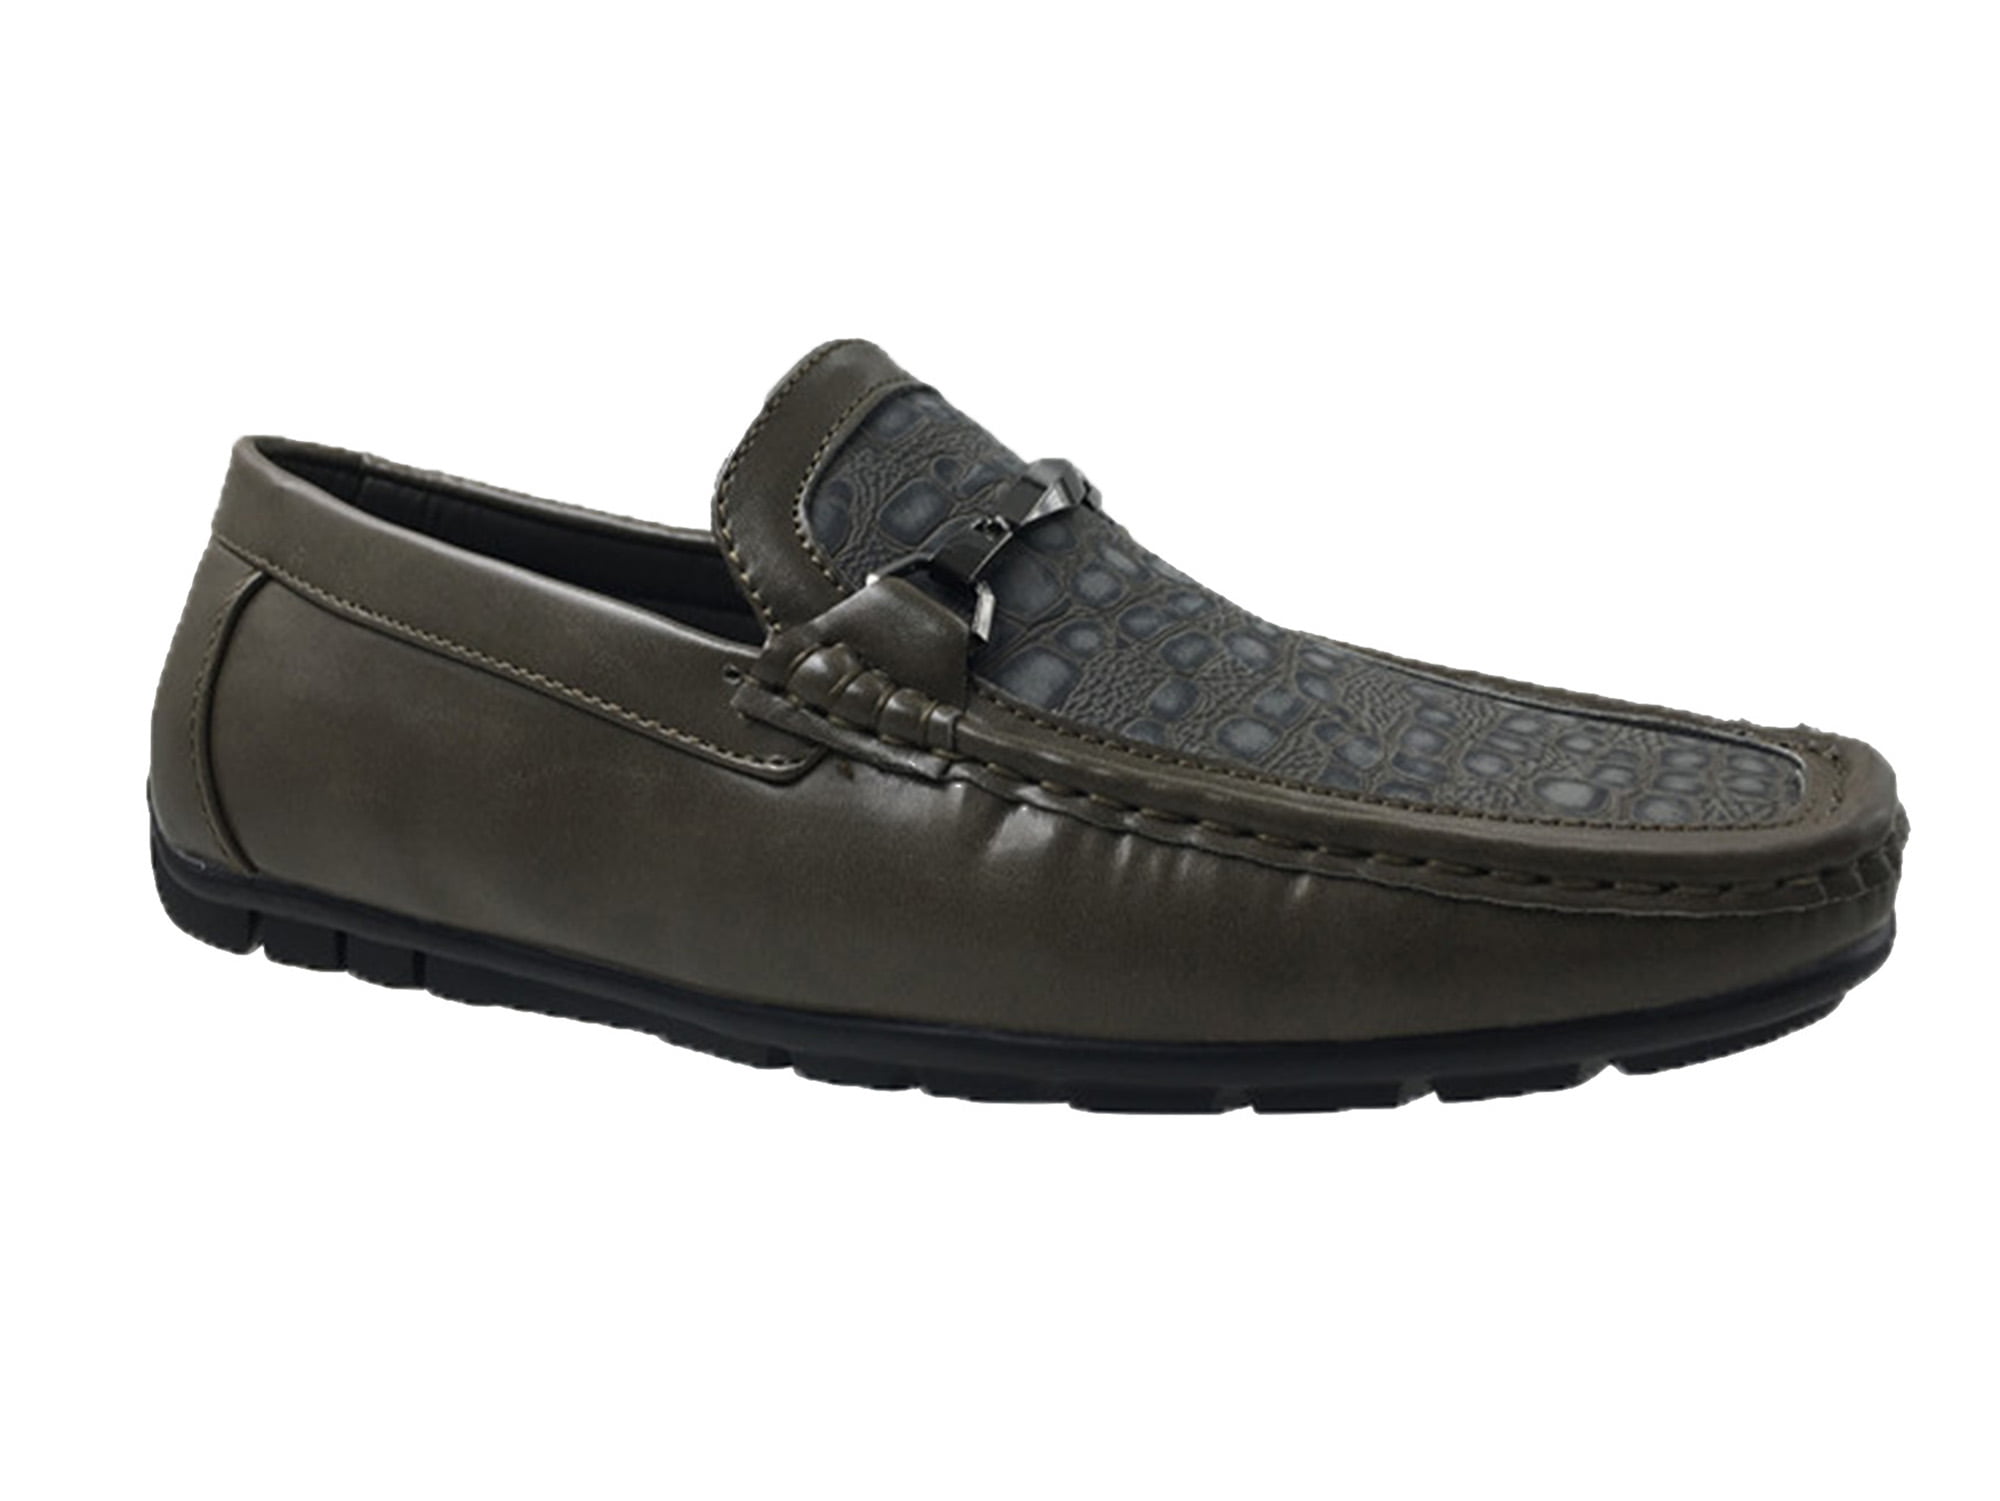 Duke King Size Boat Shoes In Tan | ASOS